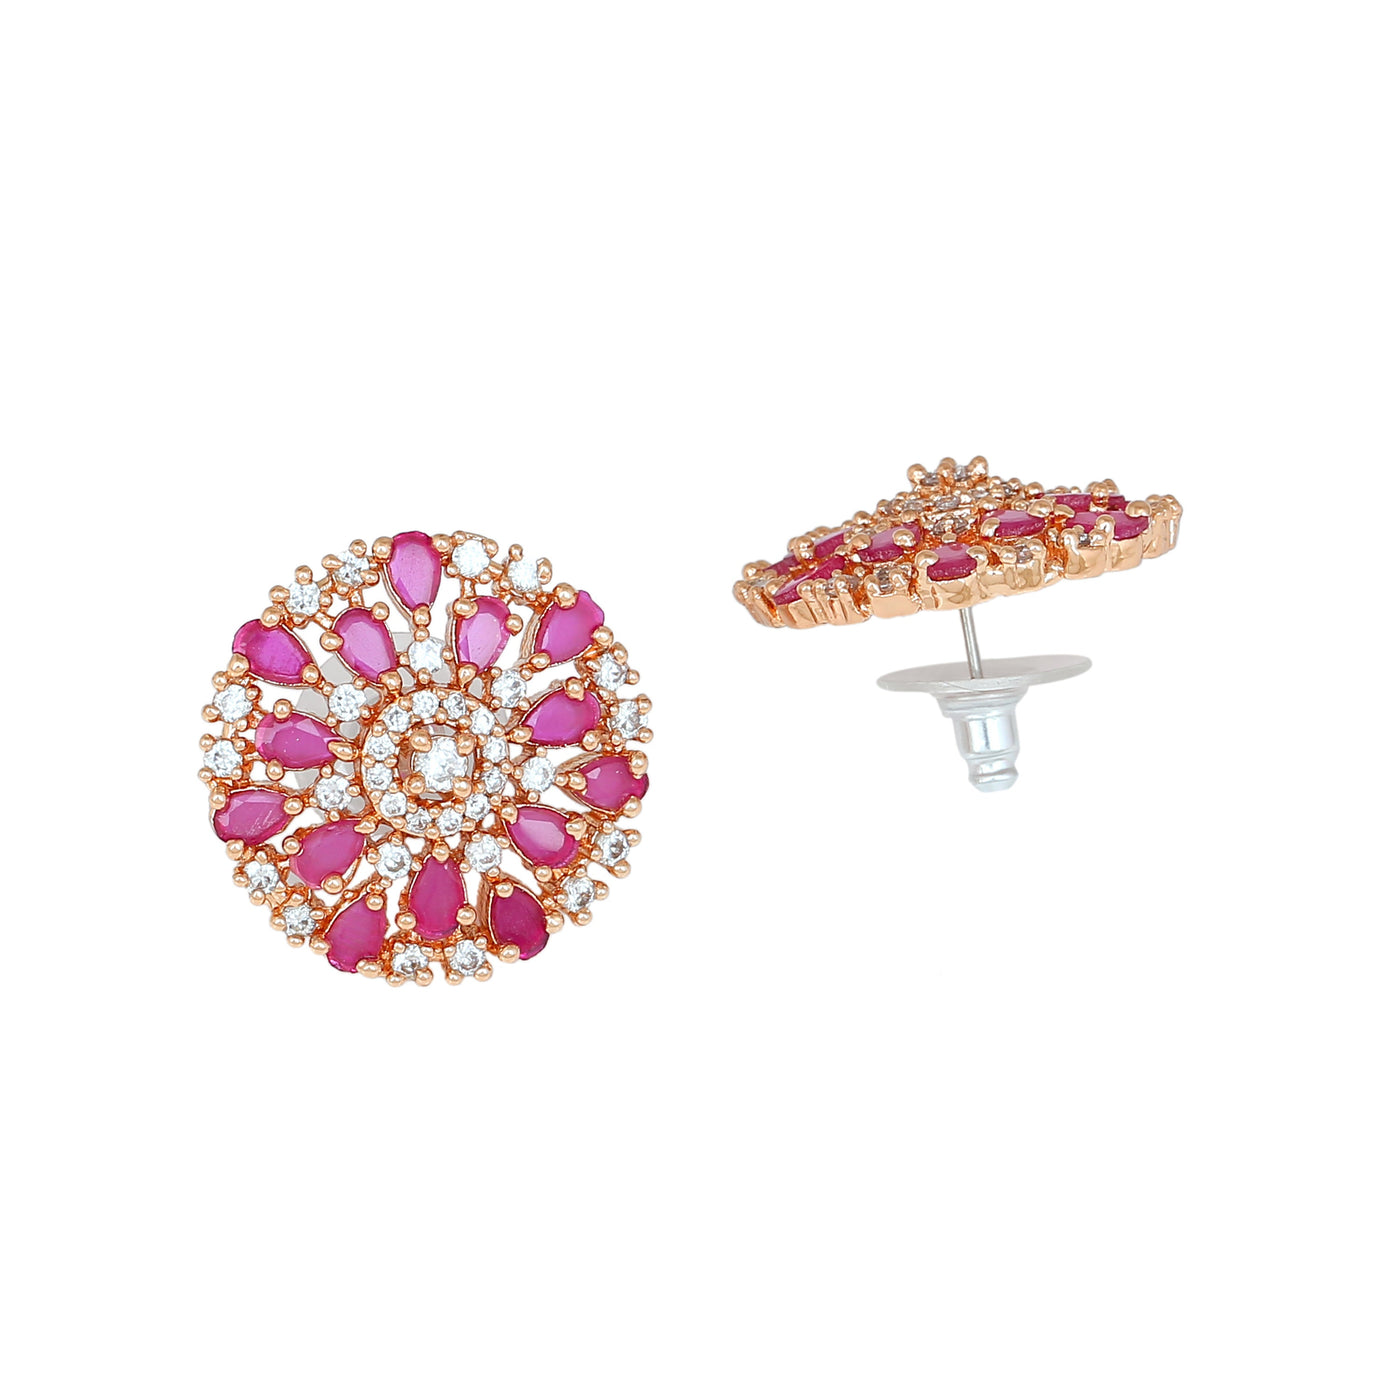 Estele Rose Gold Plated CZ Flower Designer Stud Earrings with Ruby Stones for Women